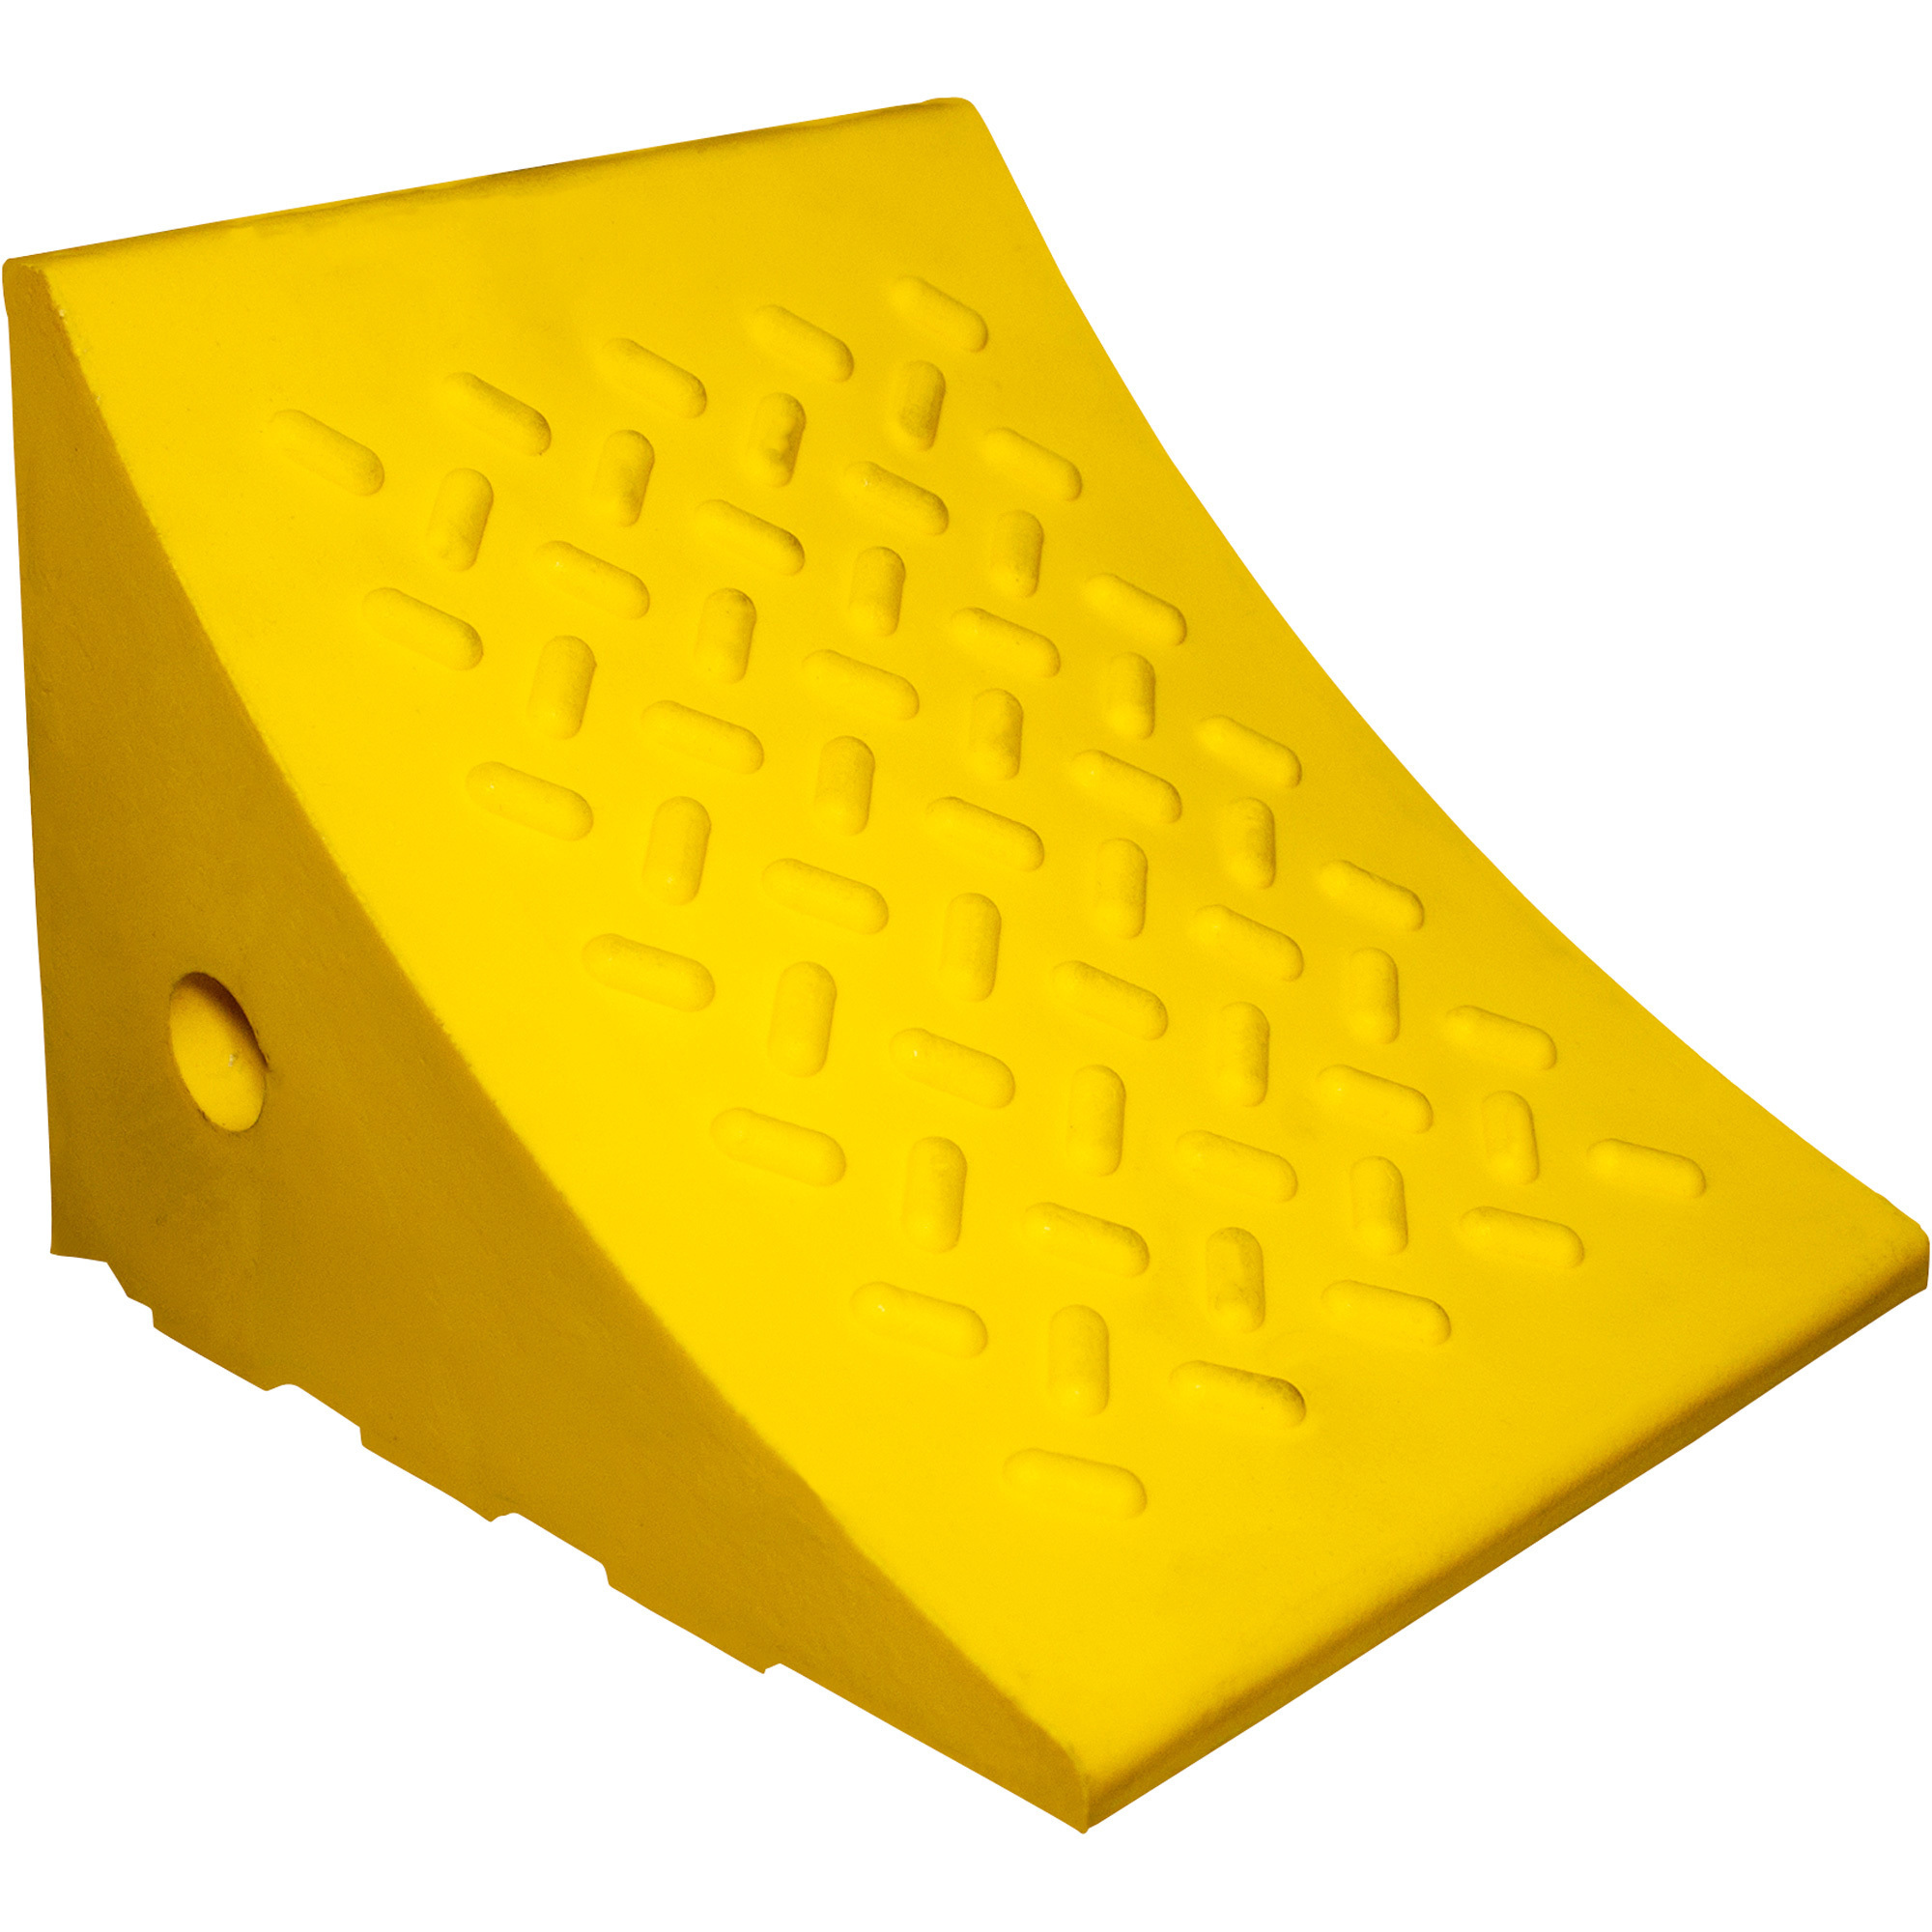 ESCO Weather-Resistant Polyurethane Wheel Chock â Safety Yellow, 10-Ton Capacity, 8.5Inch L x 6.25Inch H